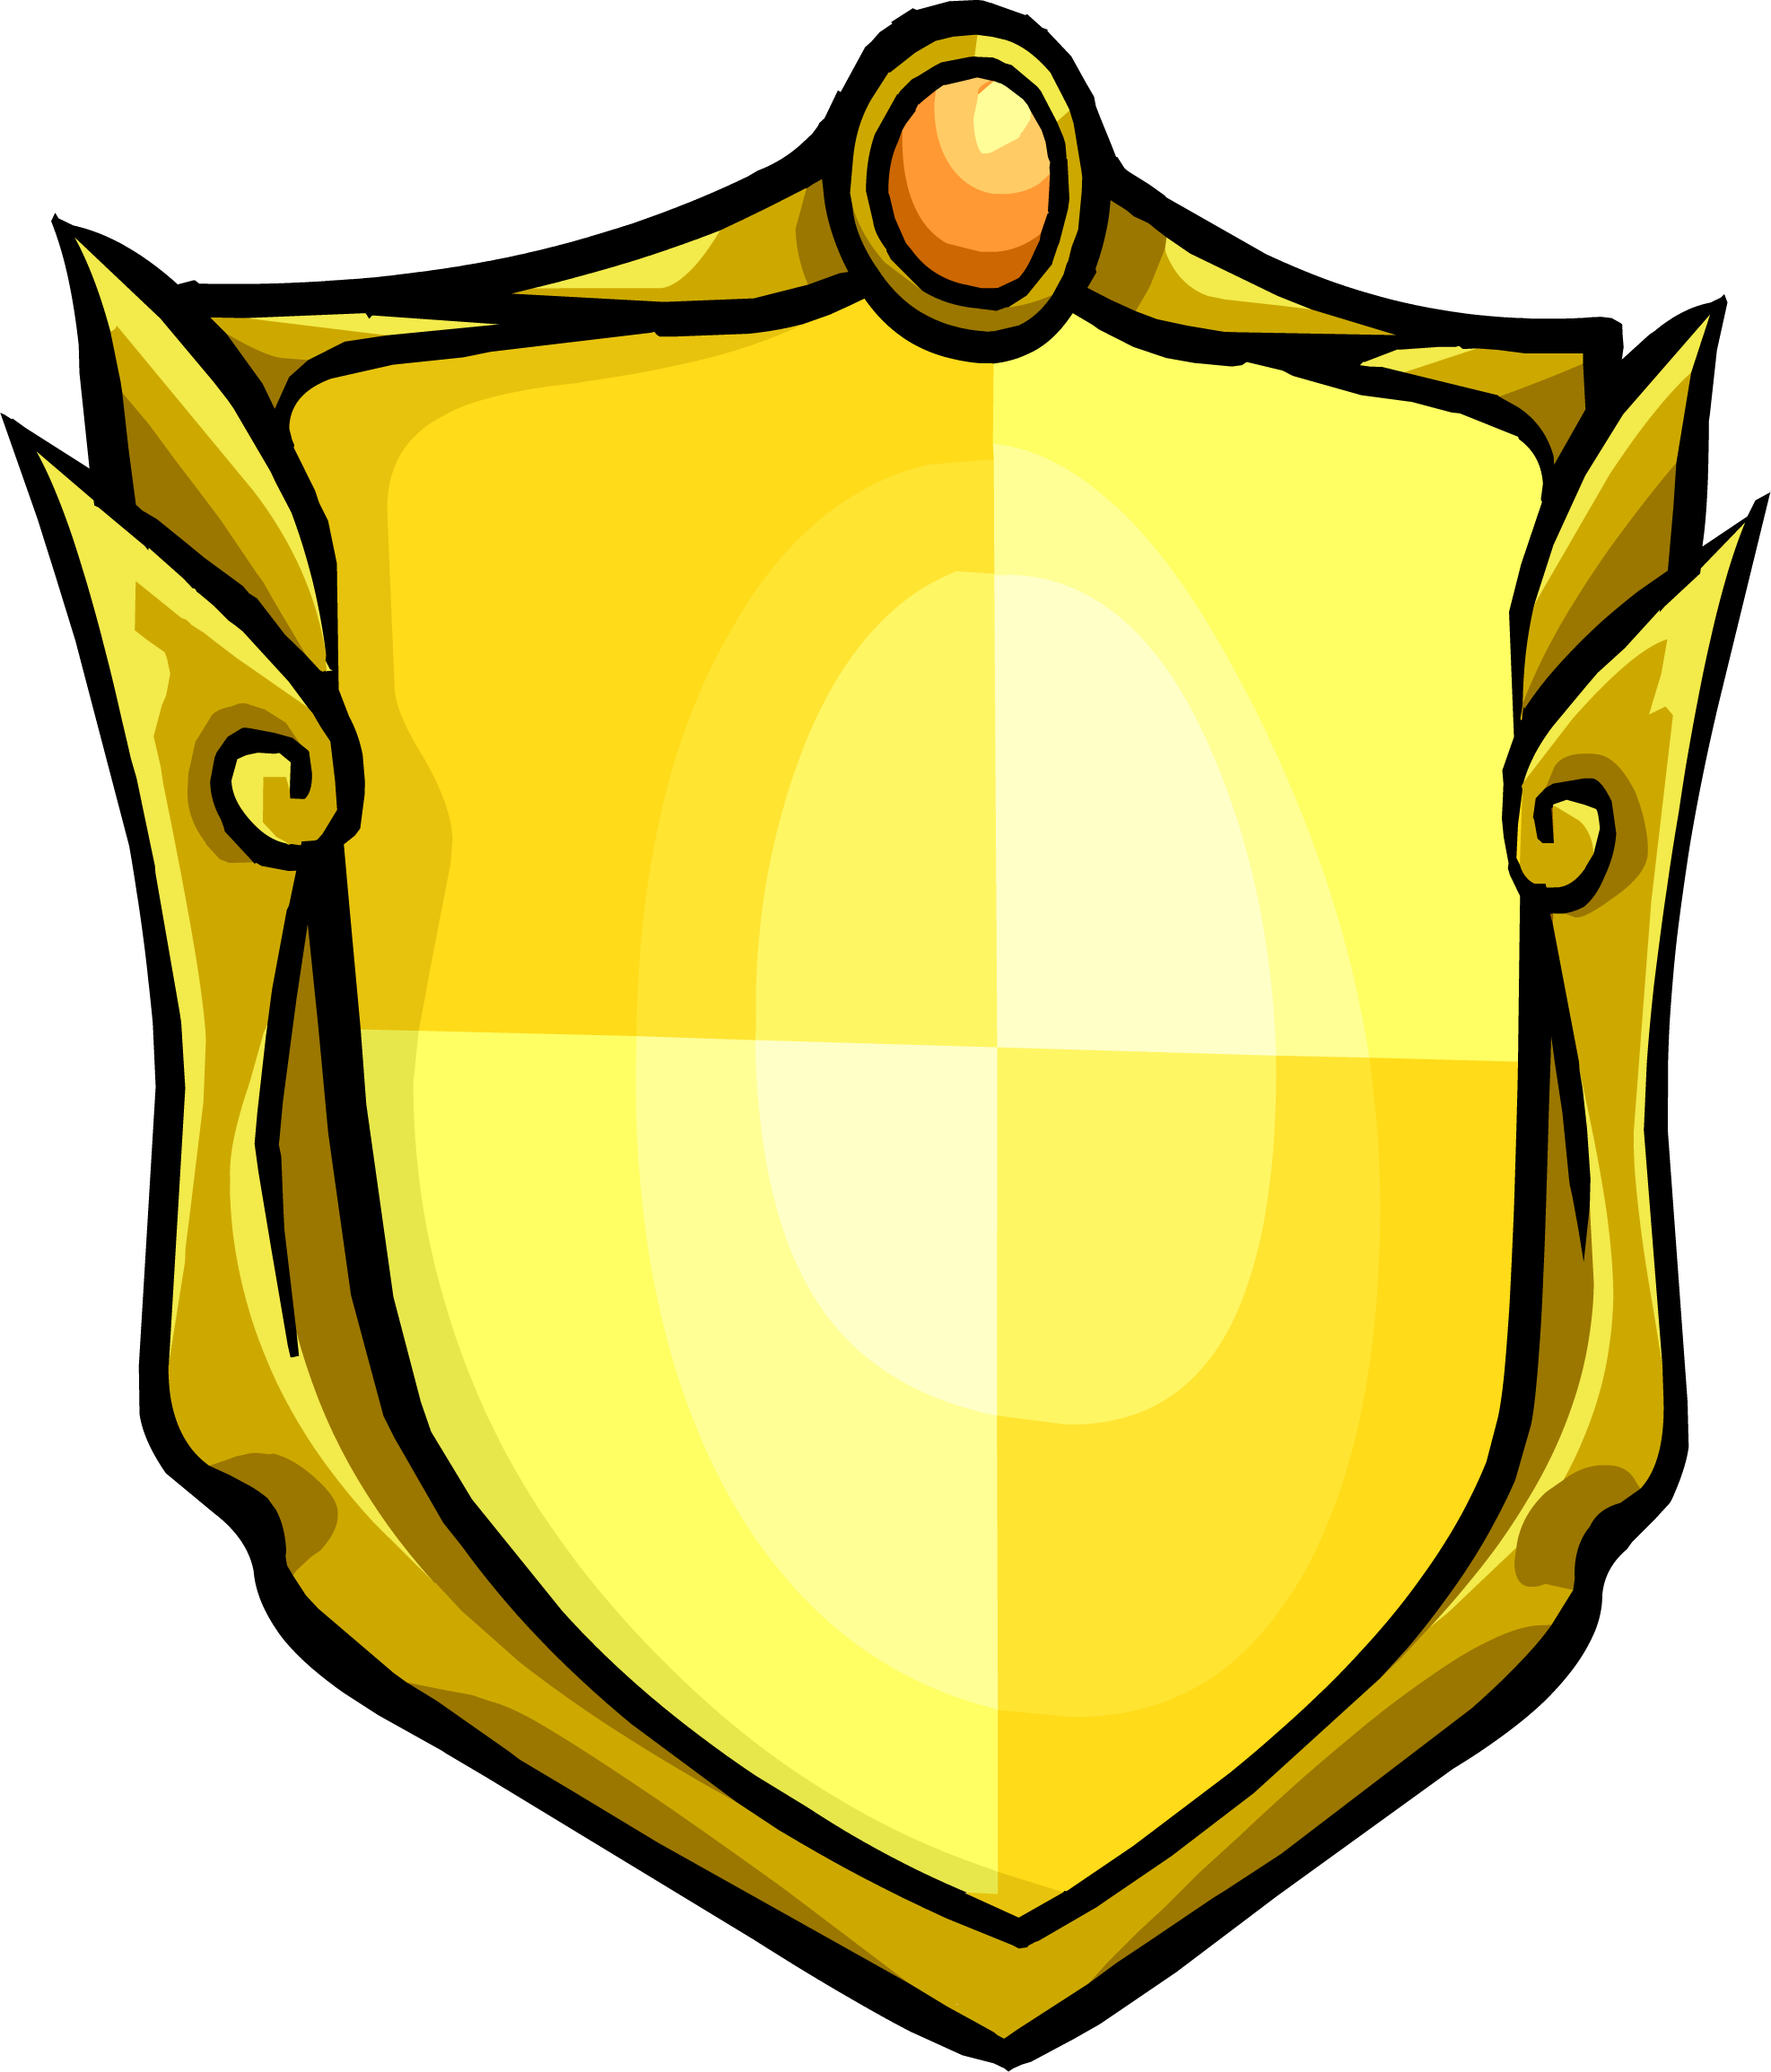 Image result for club penguin golden shield